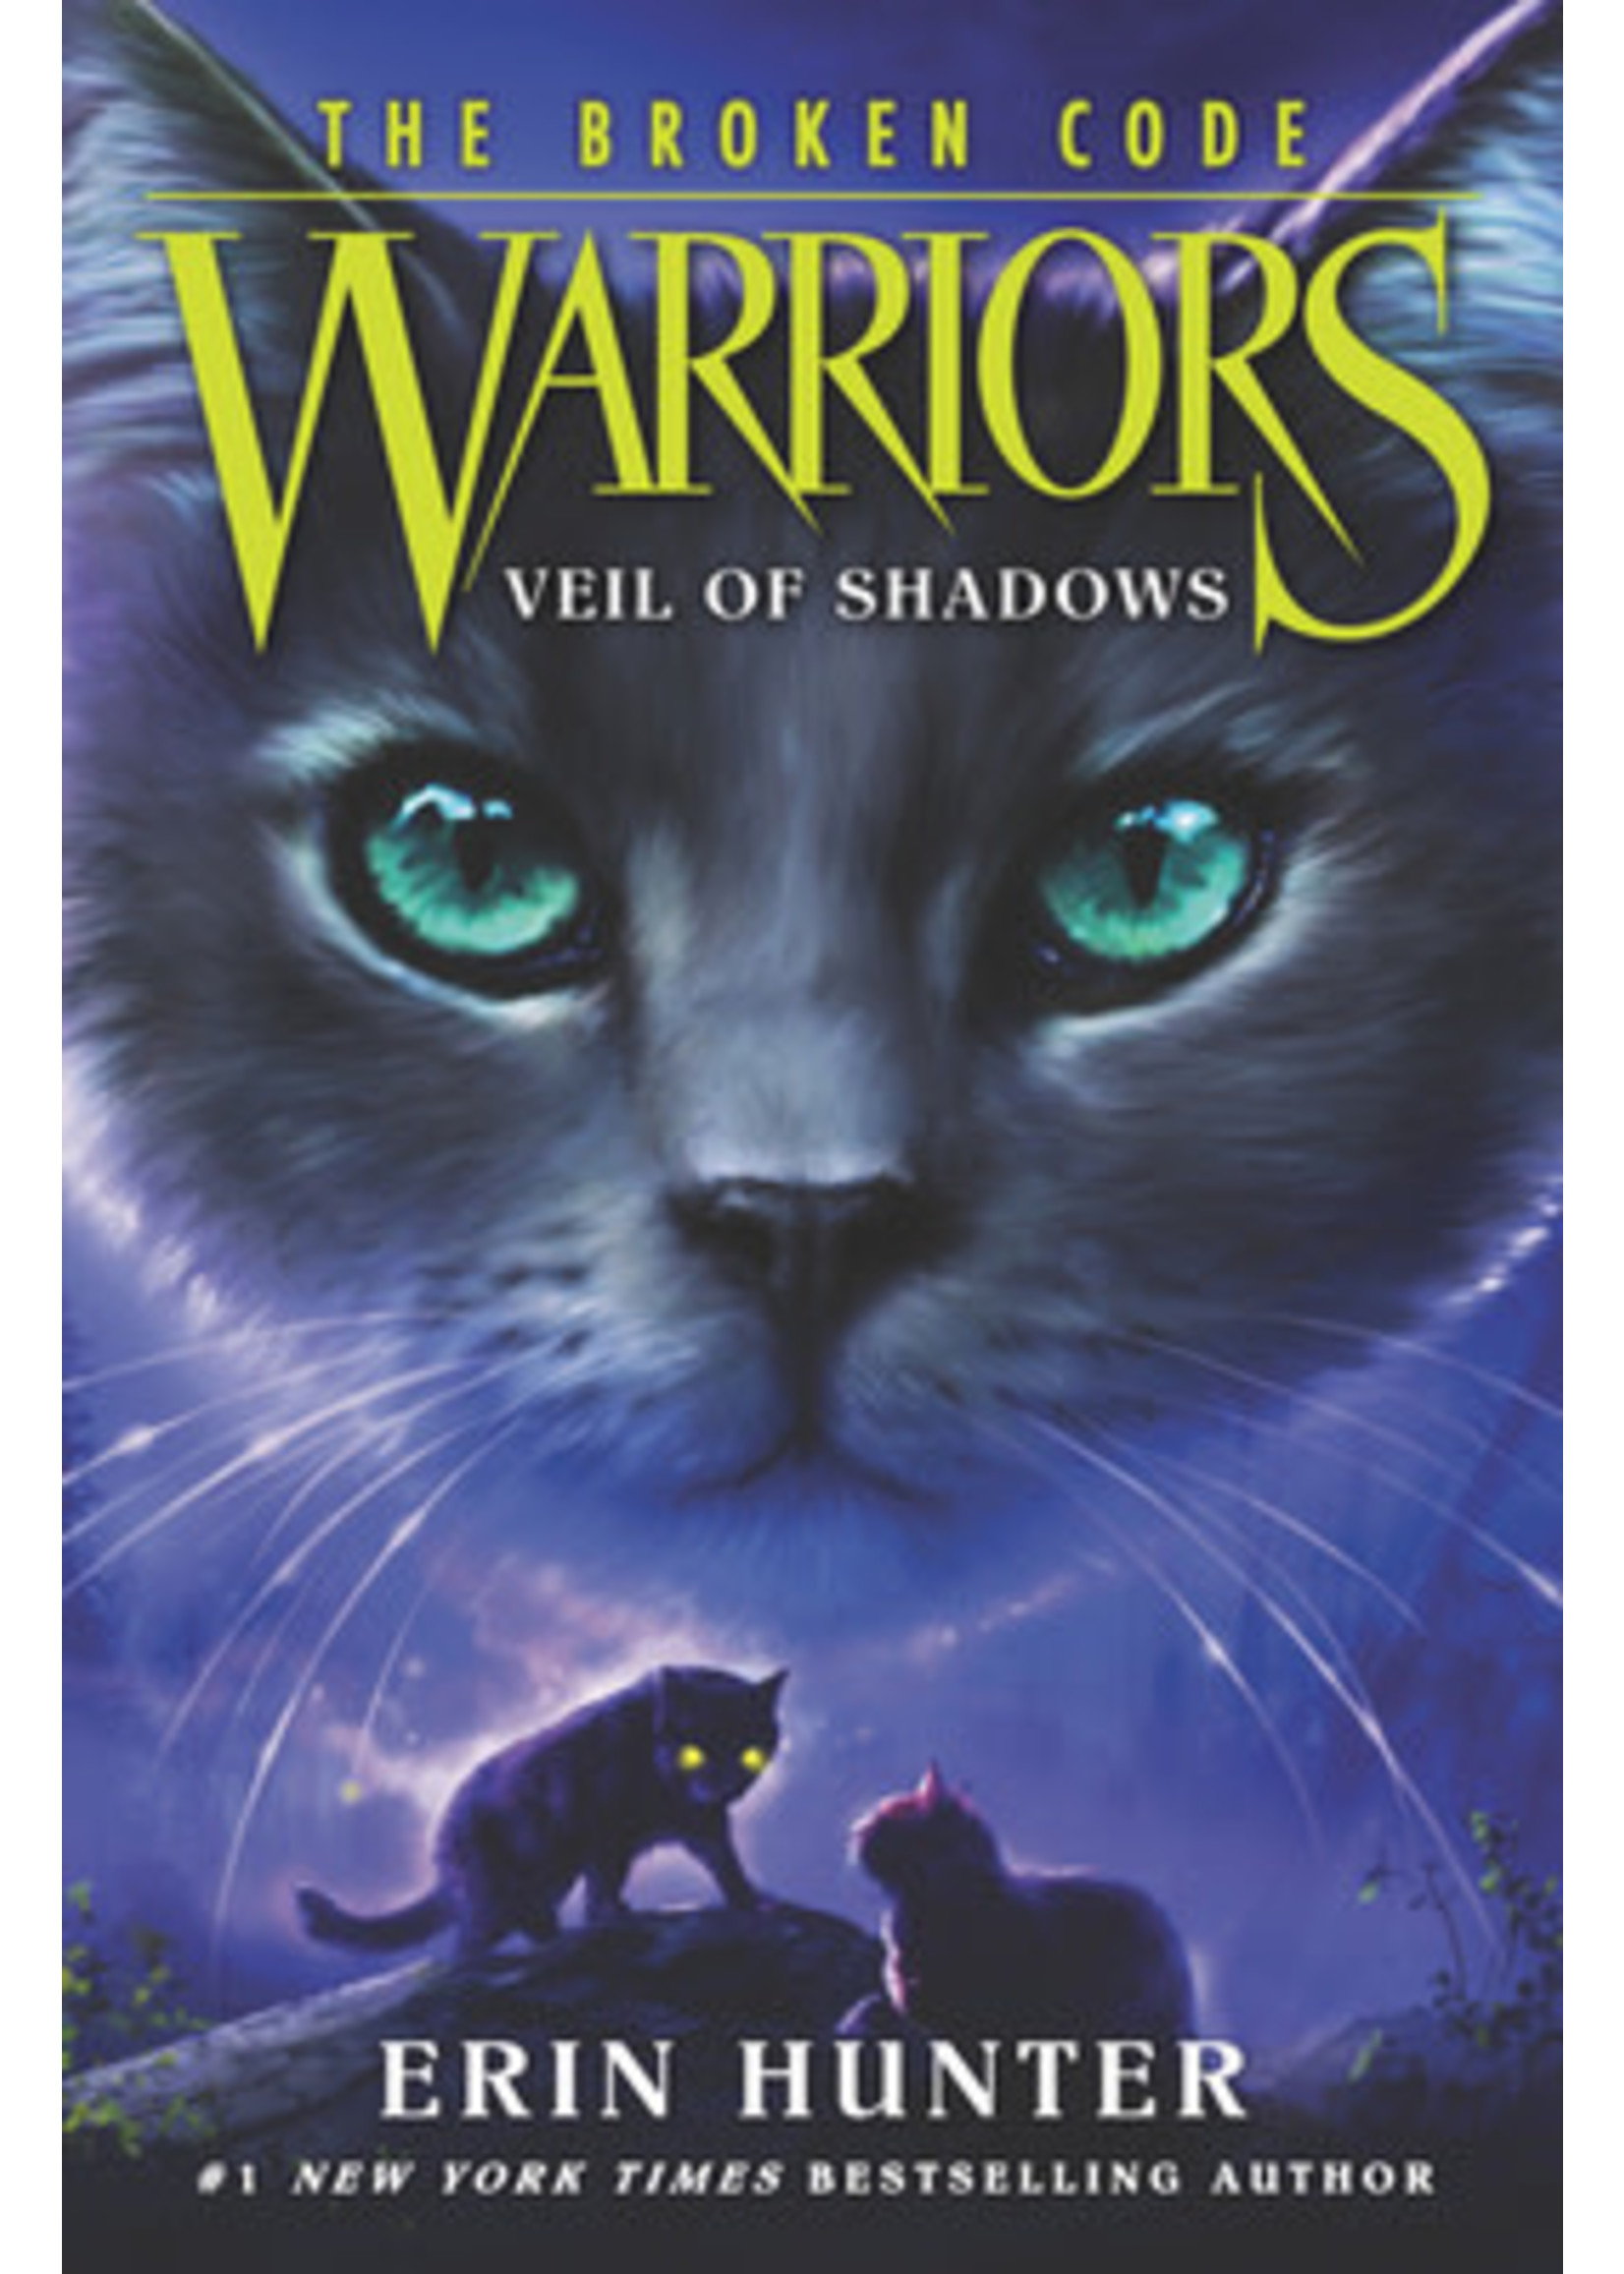 Veil of Shadows (Warriors: The Broken Code #3) by Erin Hunter